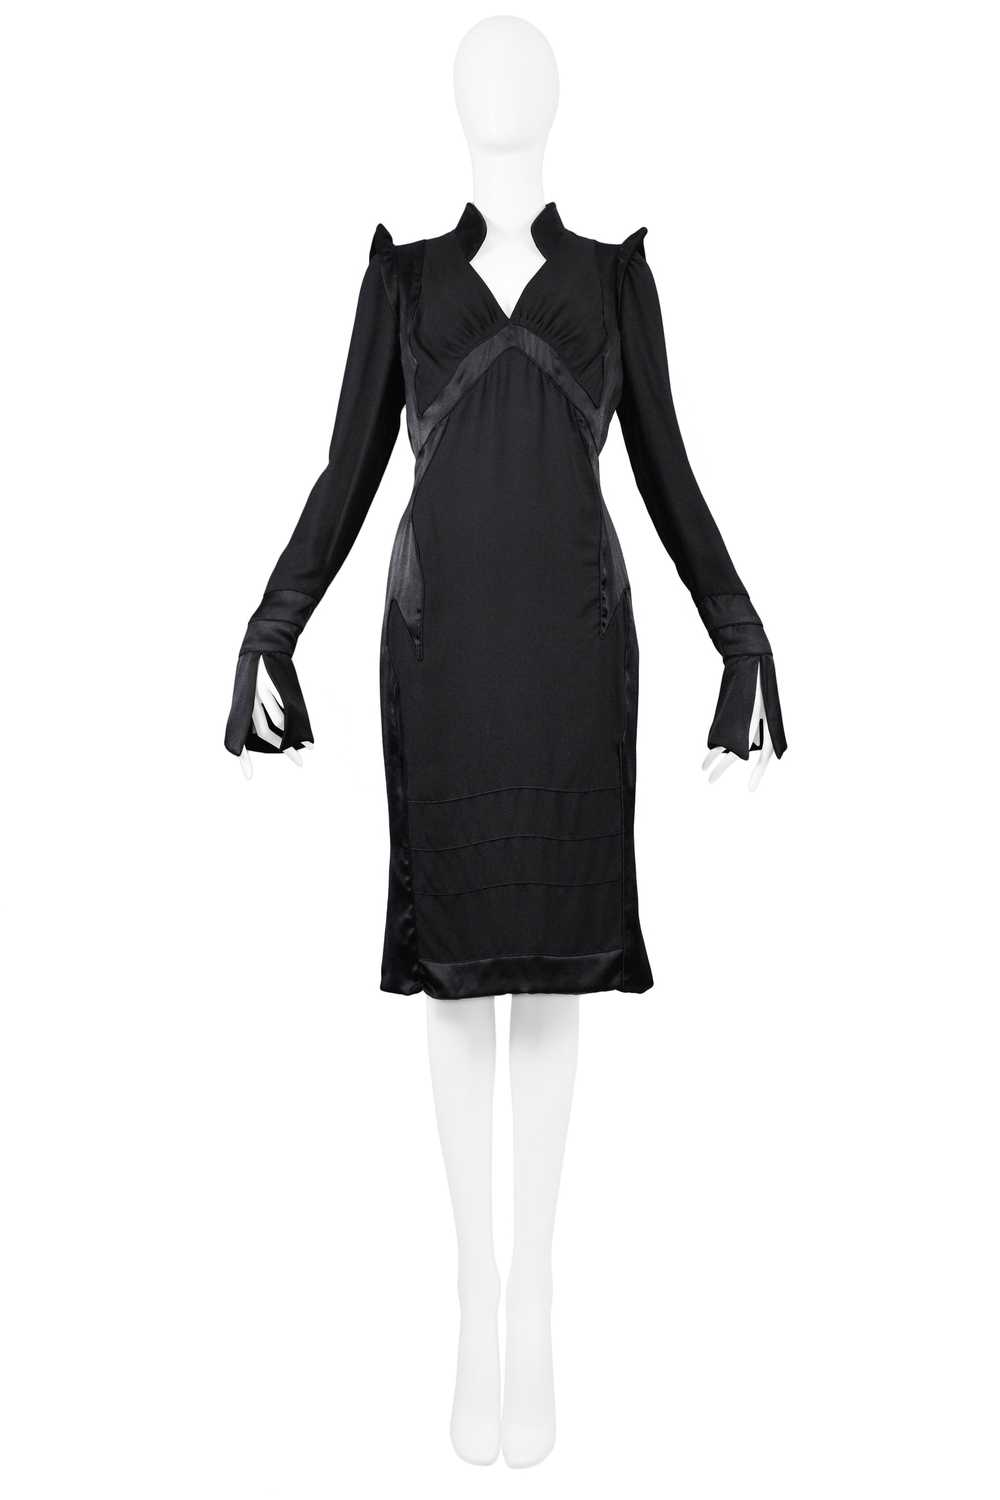 YSL BY TOM FORD BLACK SATIN MANDARIN DRESS 2004 - image 1